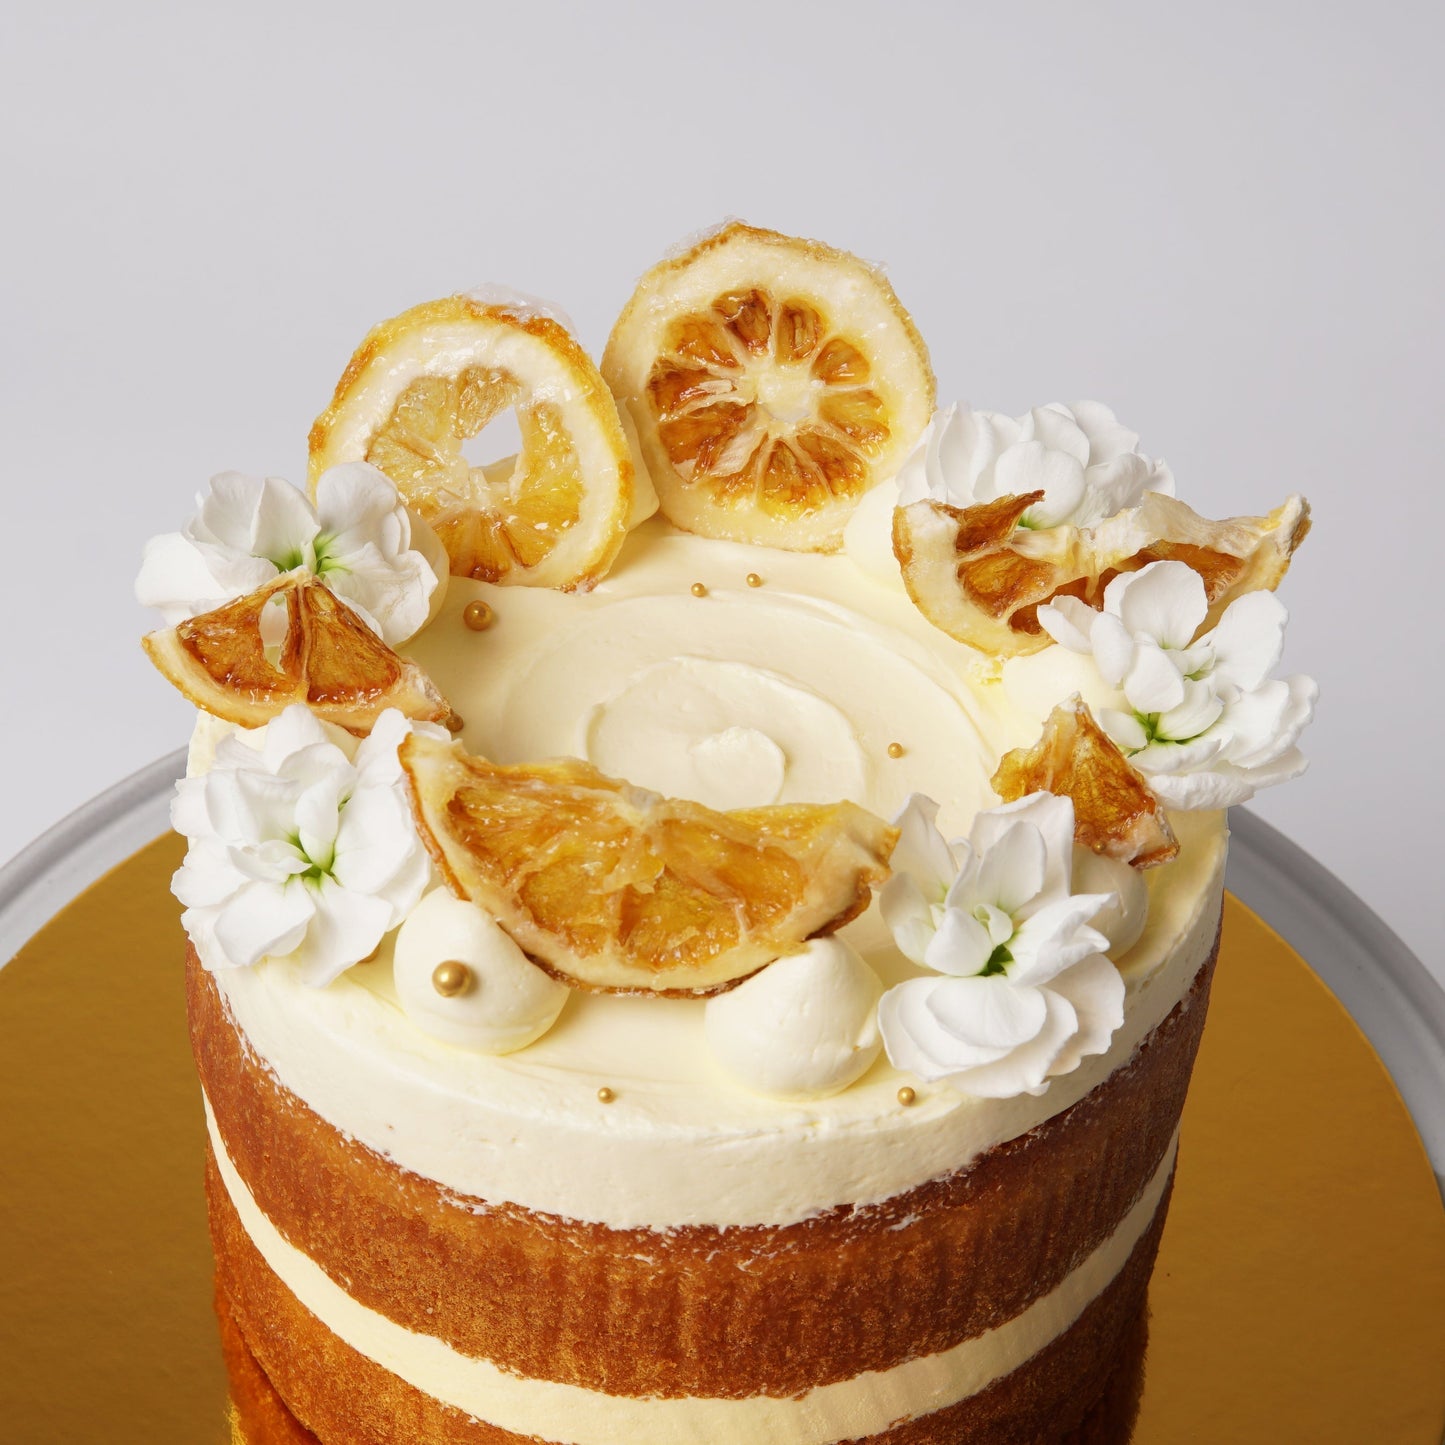 TOMORROW - Lemon & Elderflower Cake